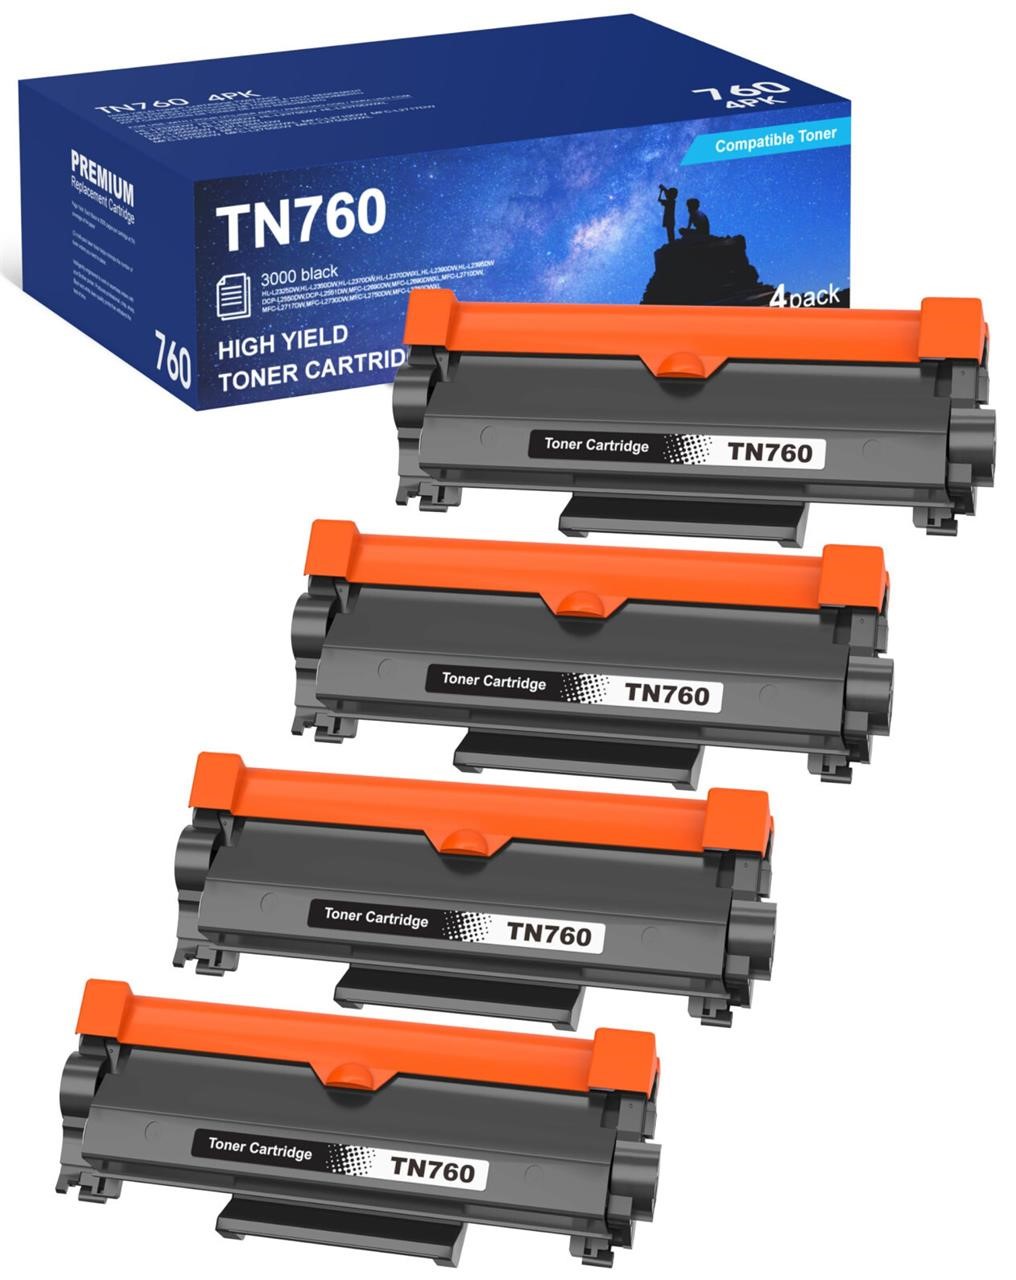 TN760 TN730 Toner for Brother Printer Compatible R